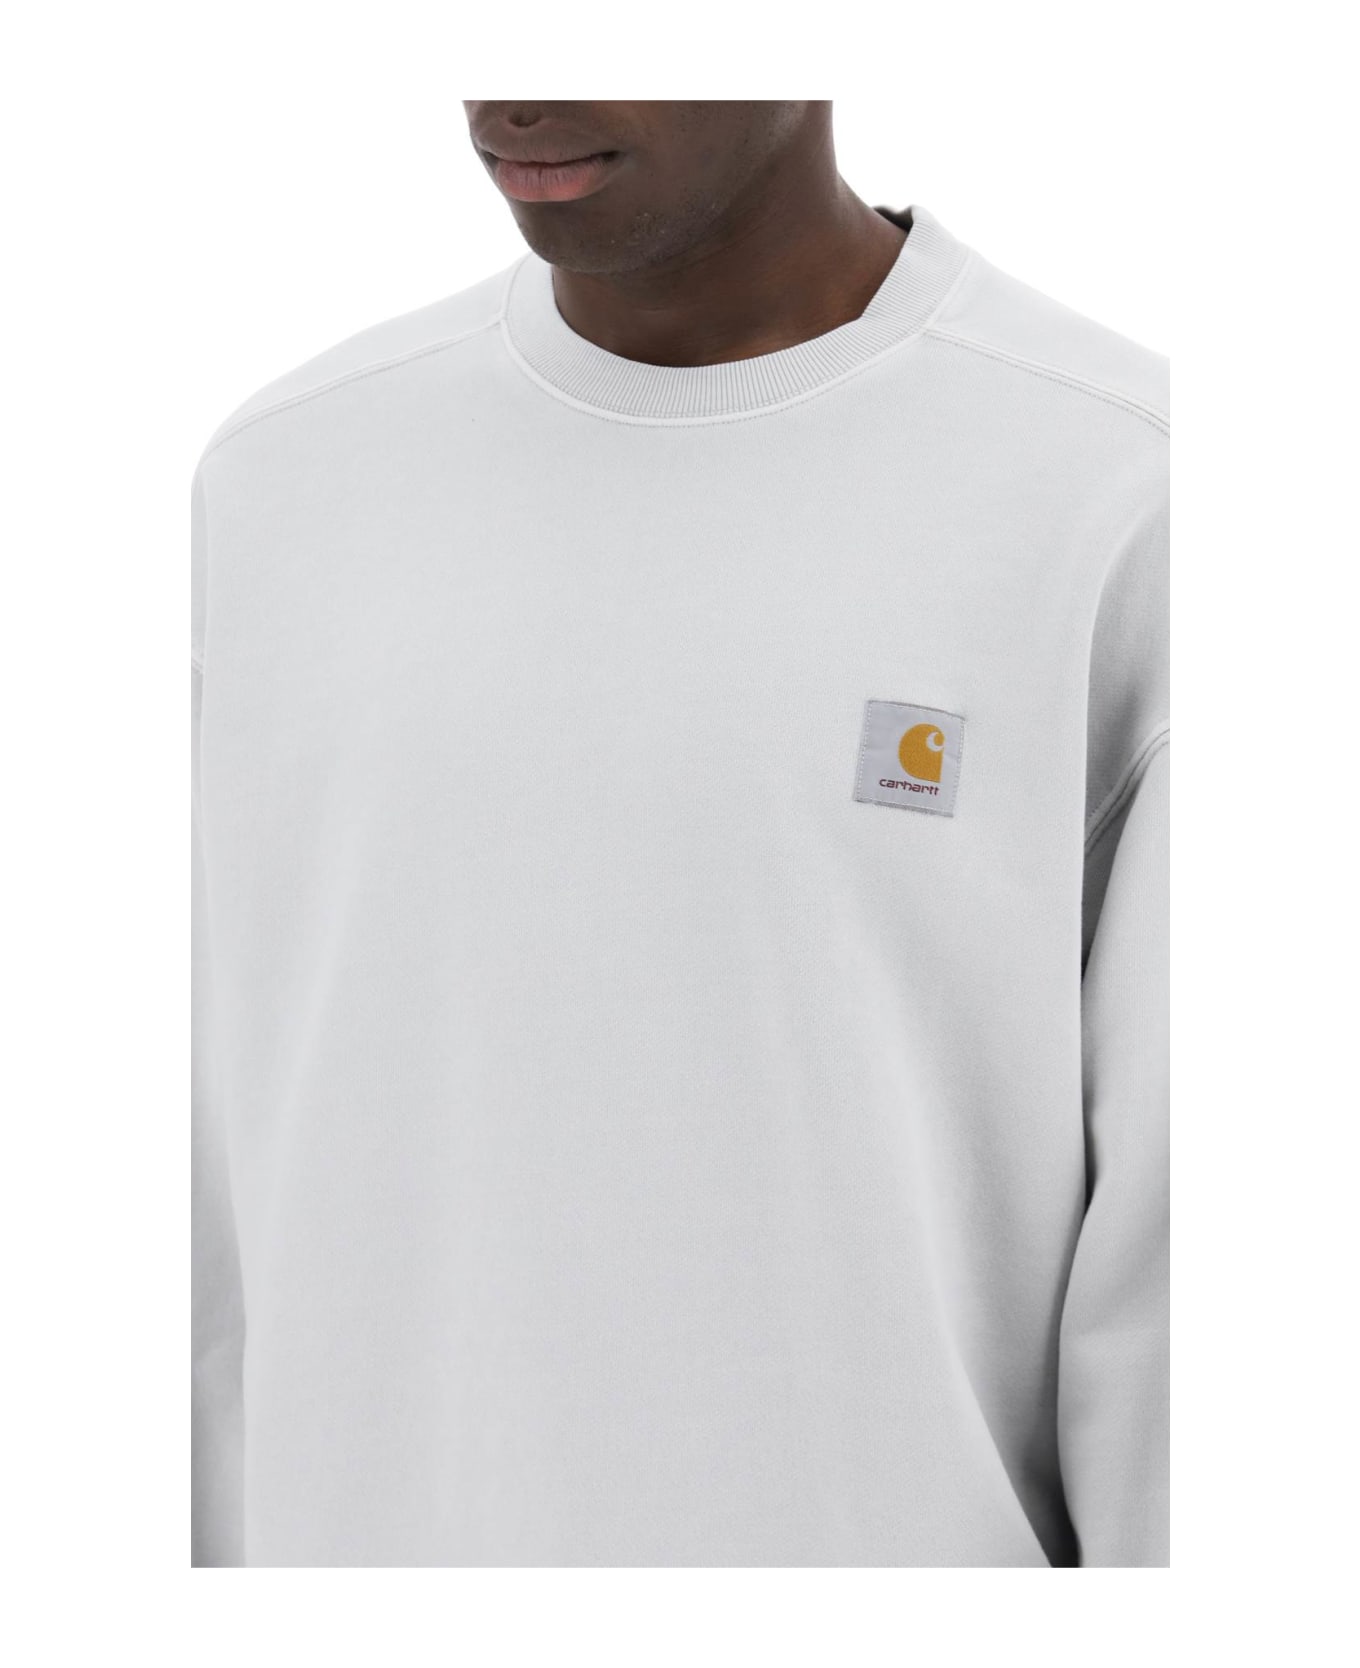 Carhartt Nelson Crew-neck Sweatshirt - Ye.gd Sonic Silver Garment Dyed